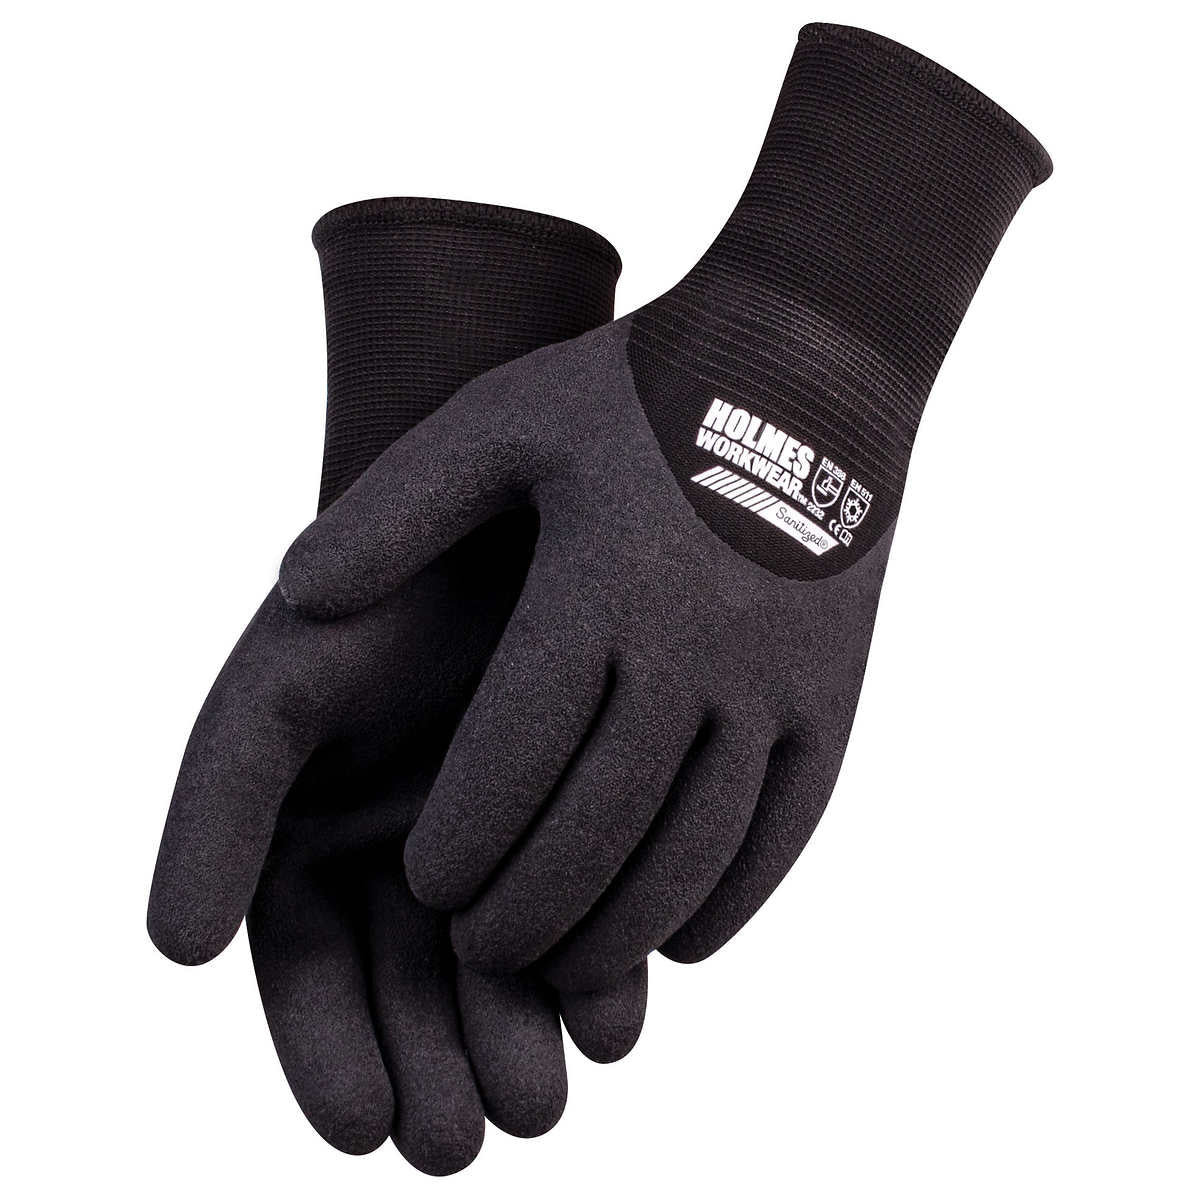 holmes-workwear-5-paires-gants-travail-hiver-winter-work-gloves-pairs-4